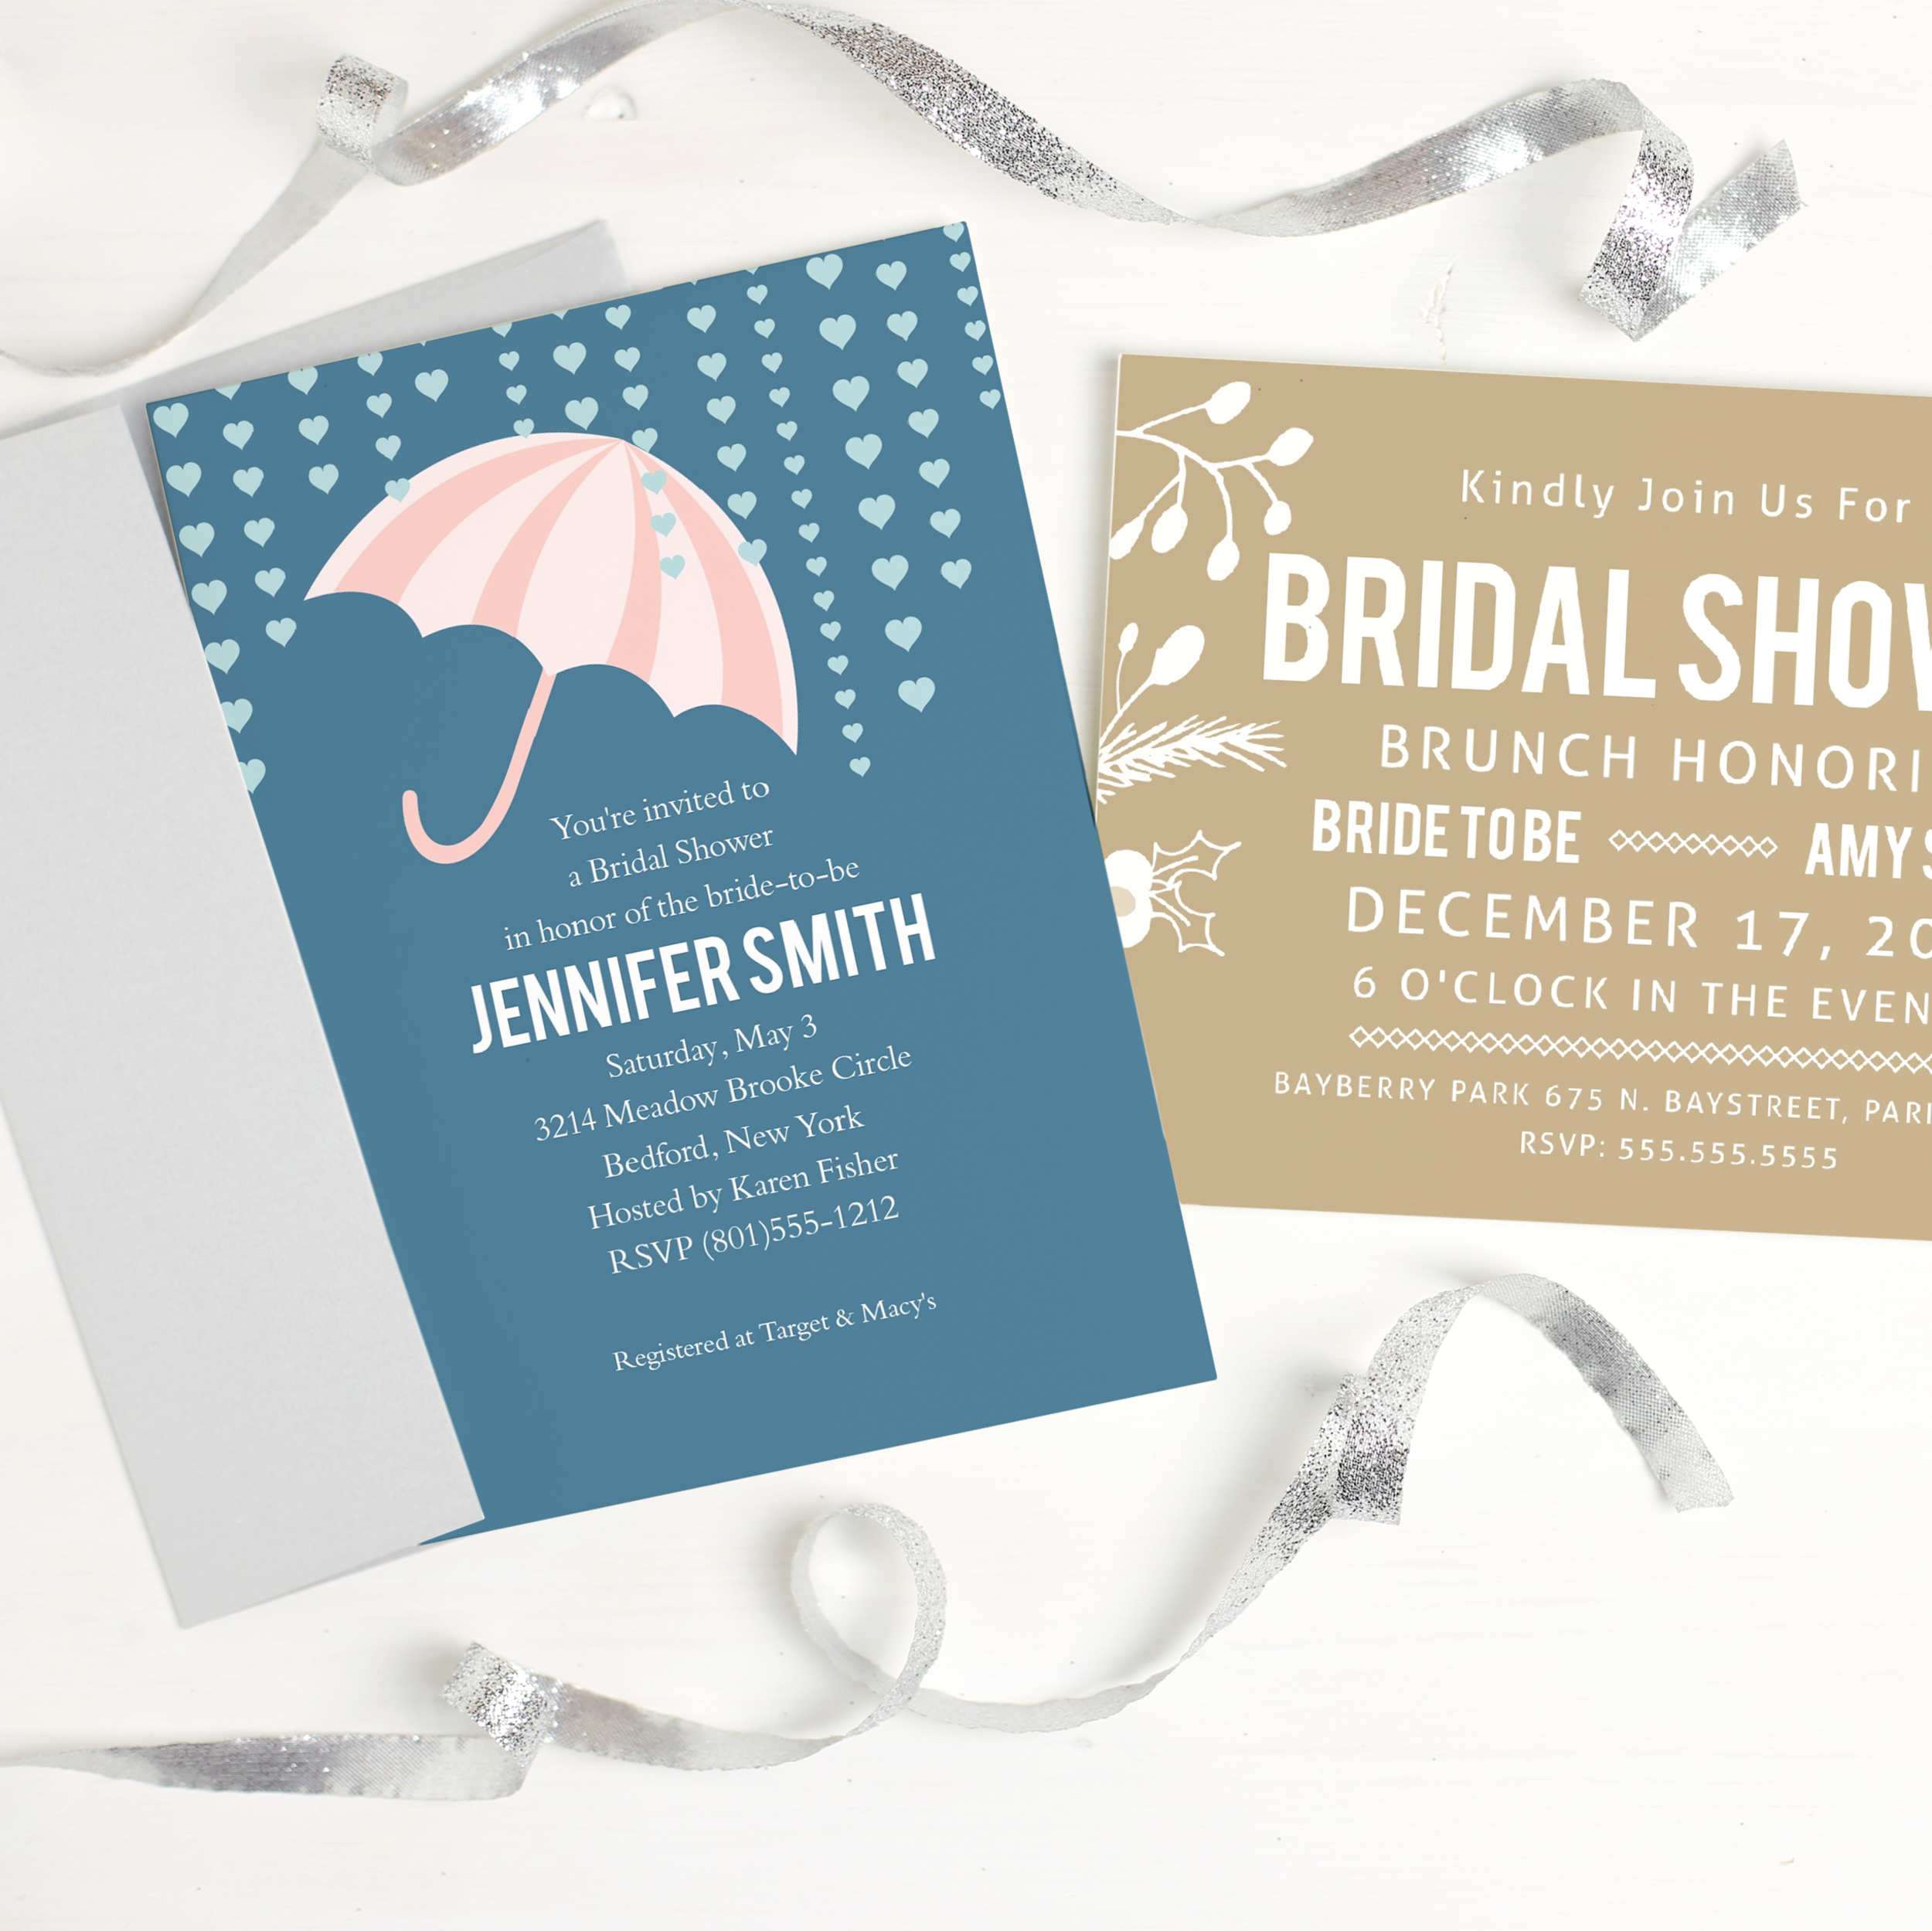 Basic_Invite_Bridal_Shower_Invitations.png